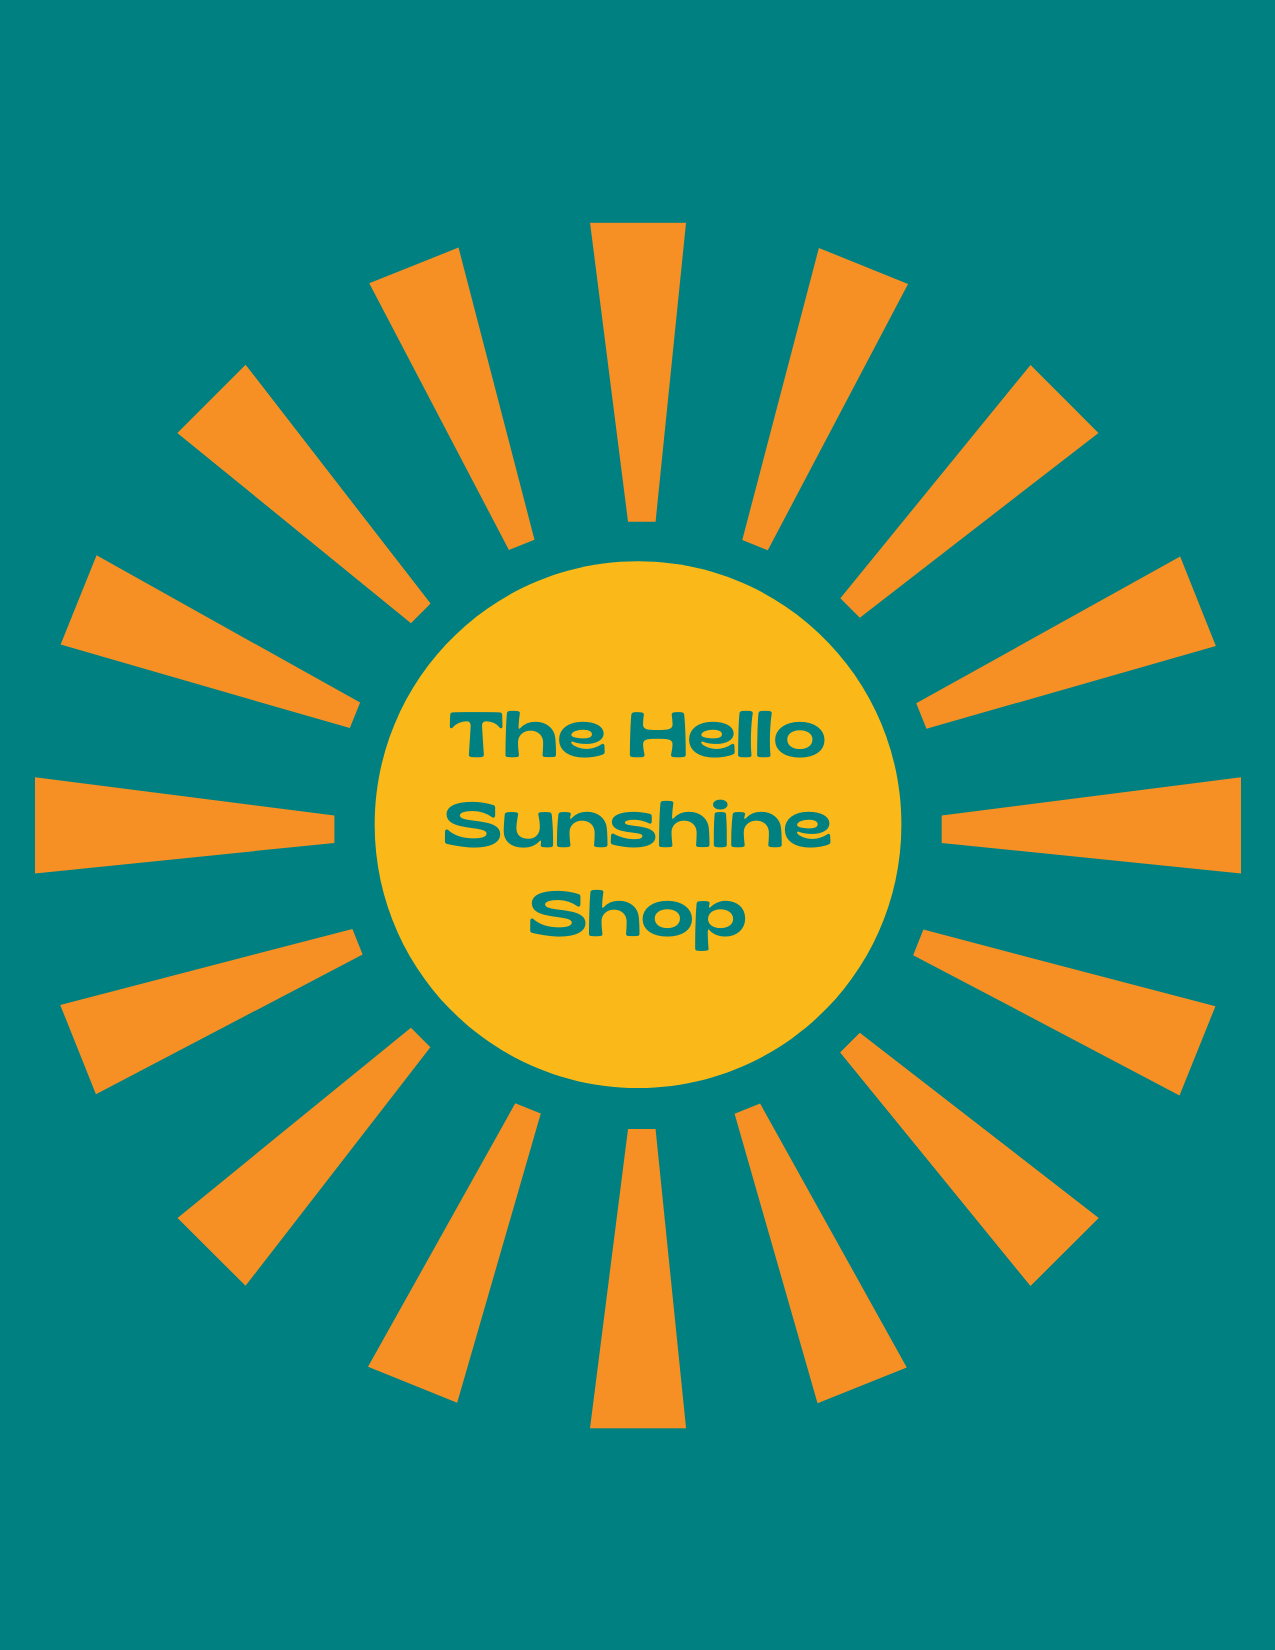 The Hello Sunshine Shop